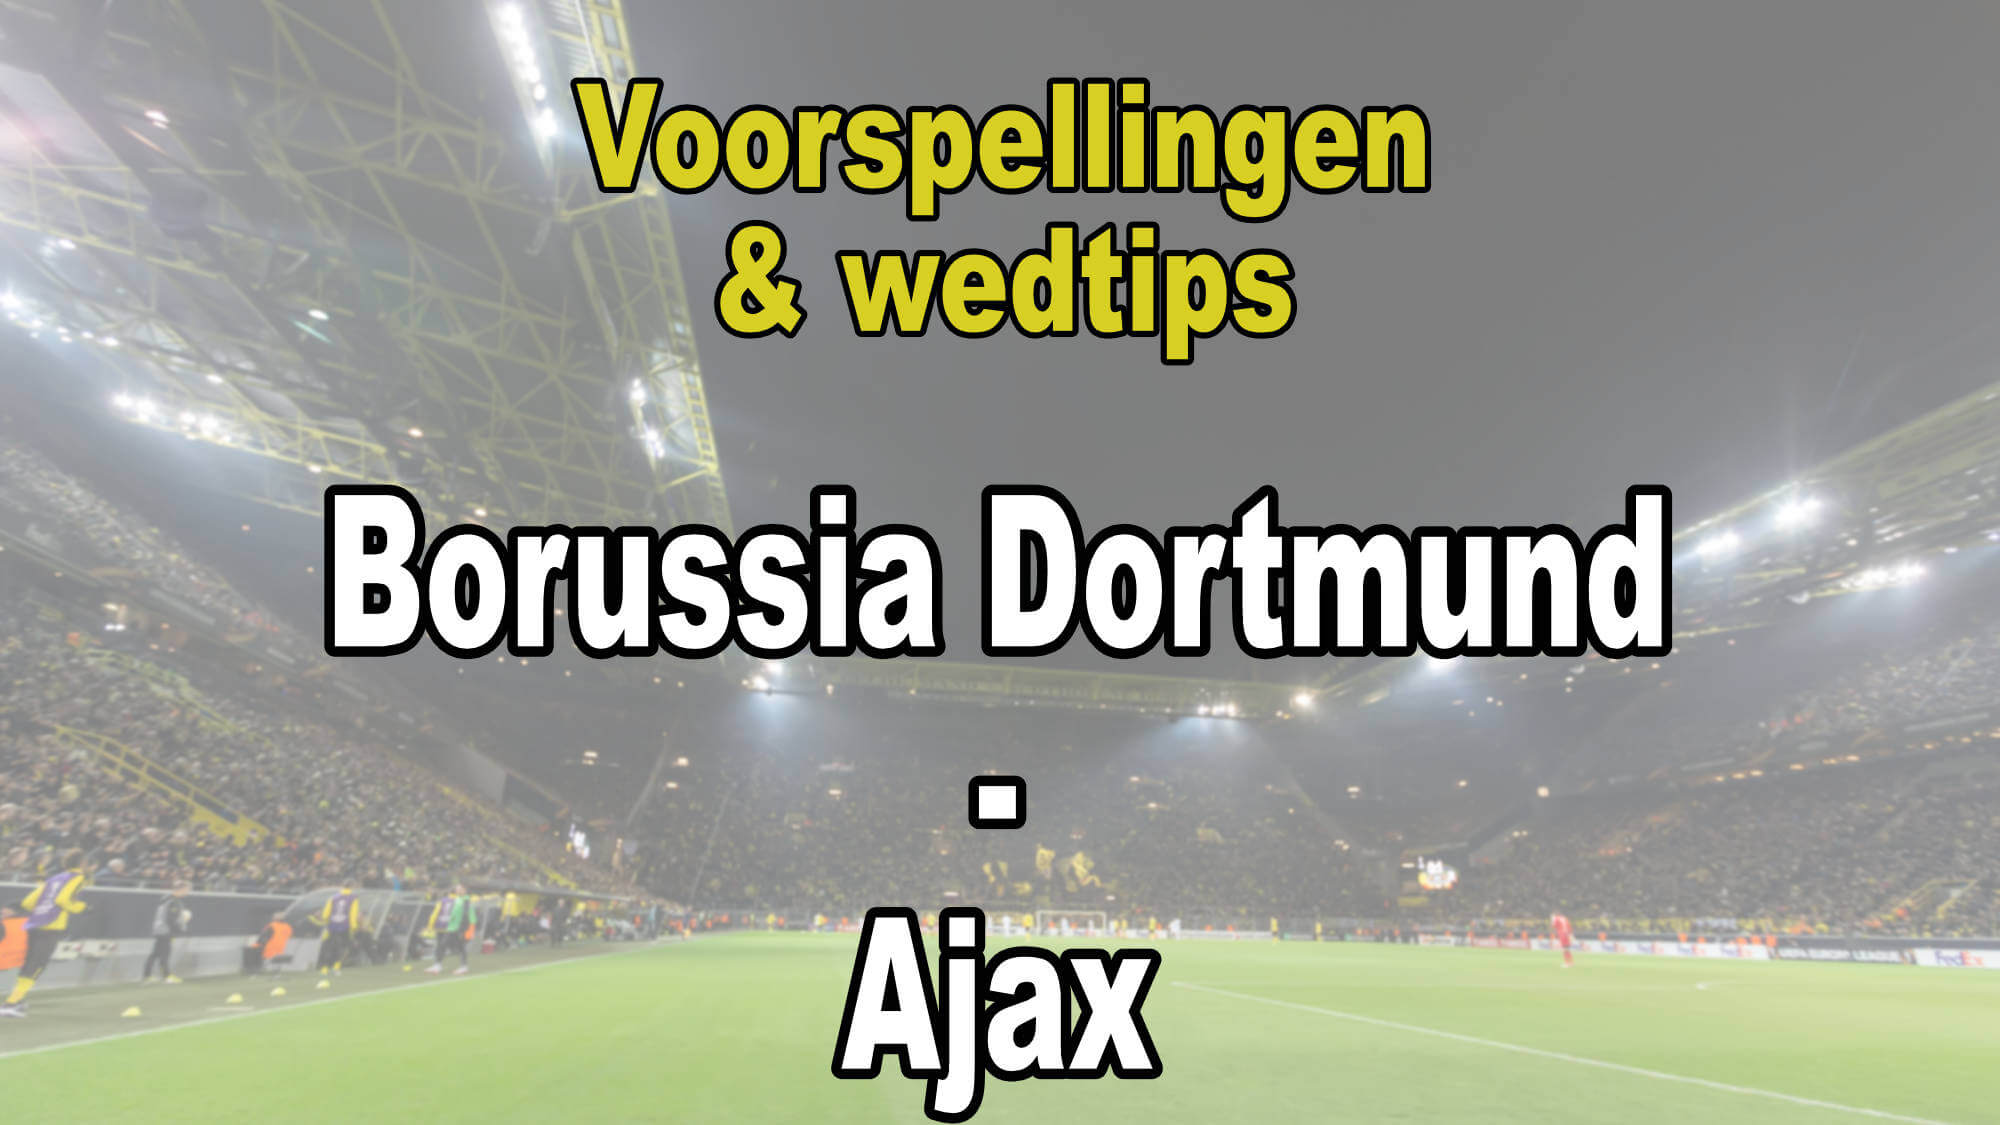 Ajax vs dortmund